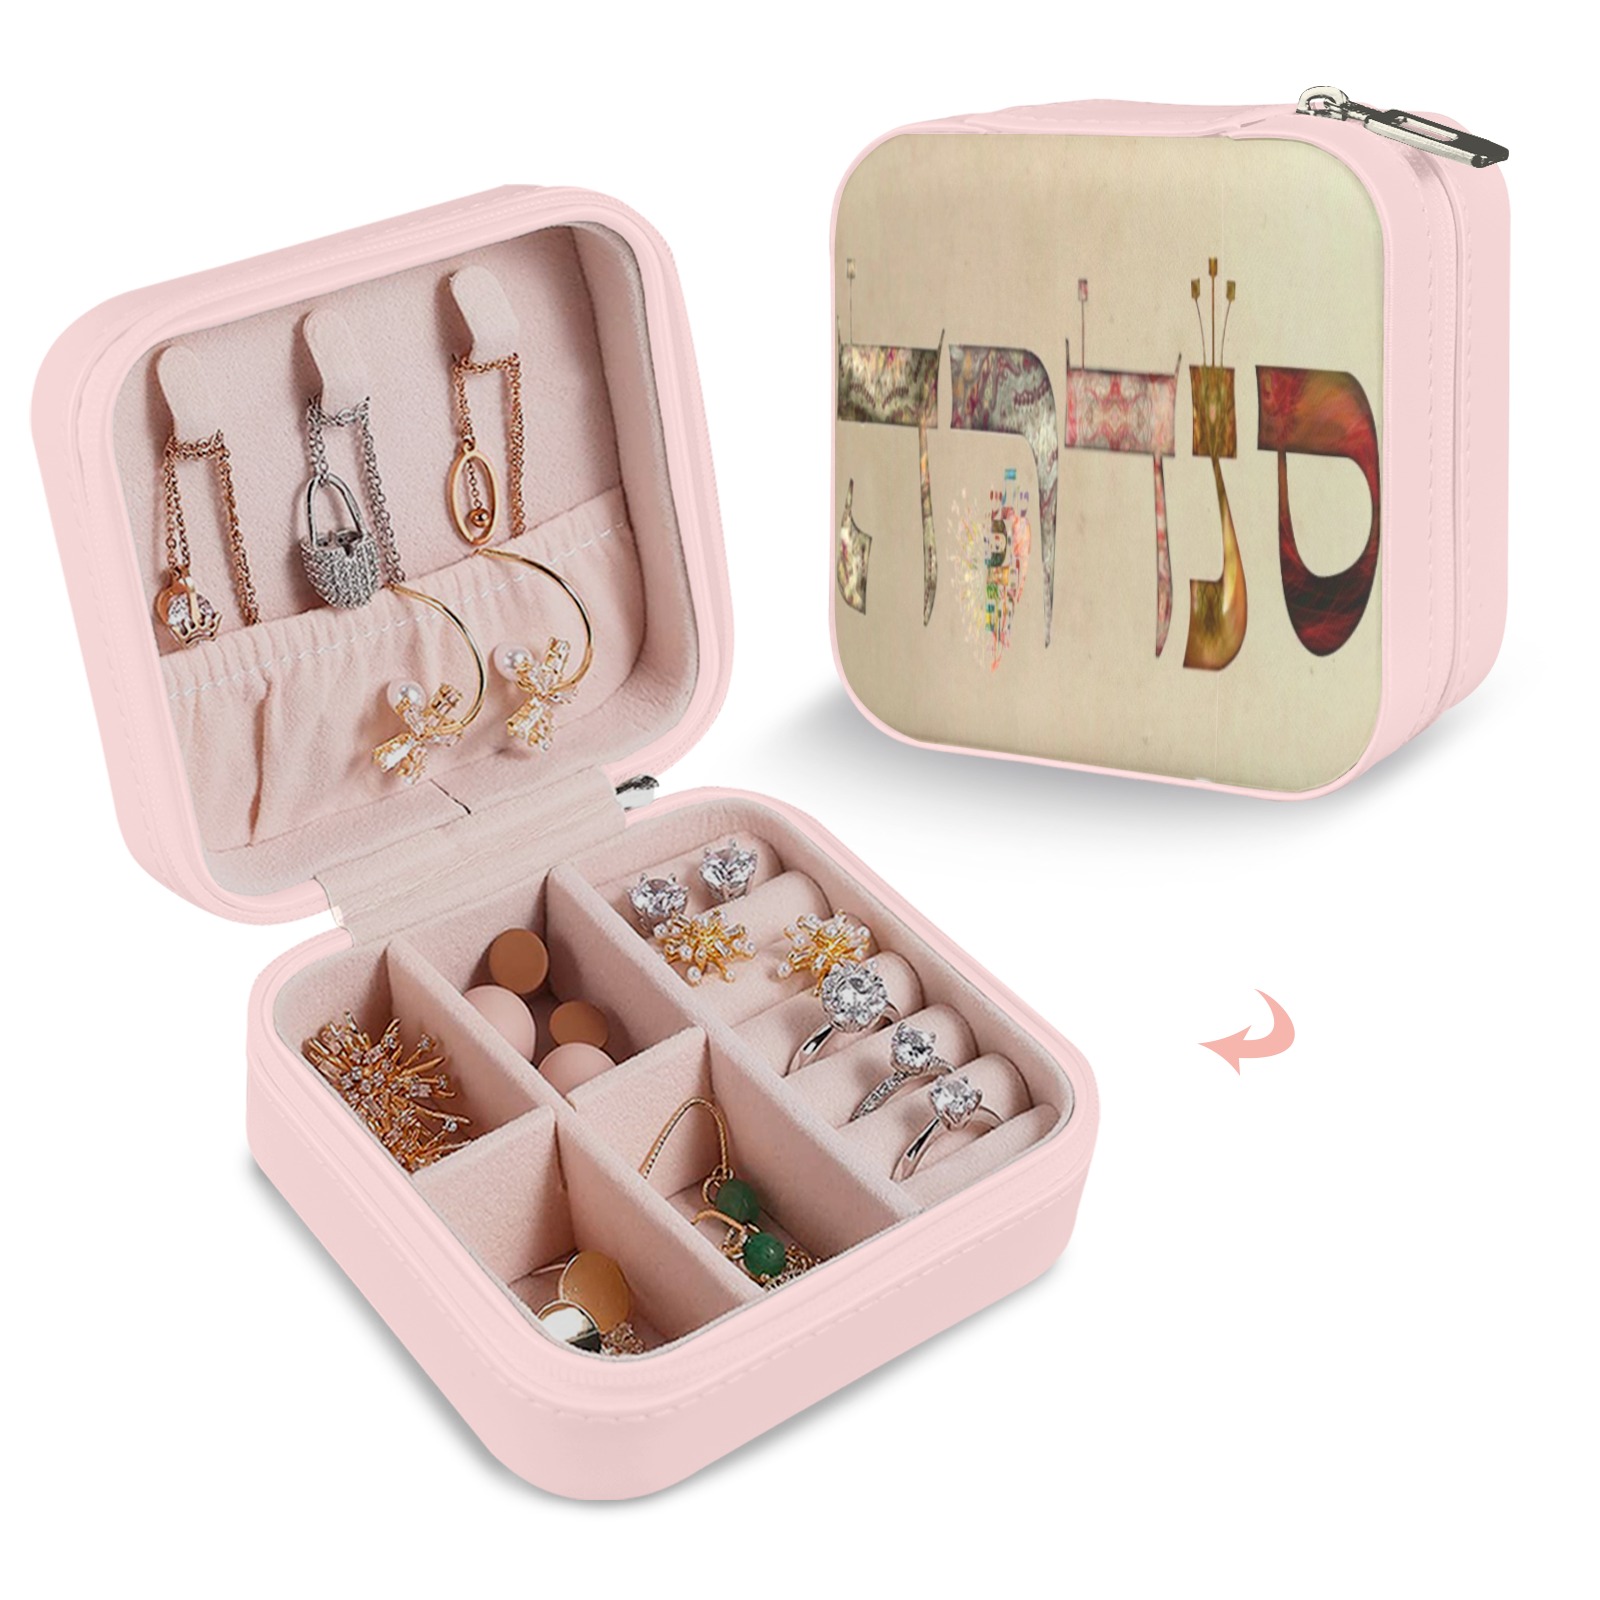 sandra Custom Printed Travel Jewelry Box